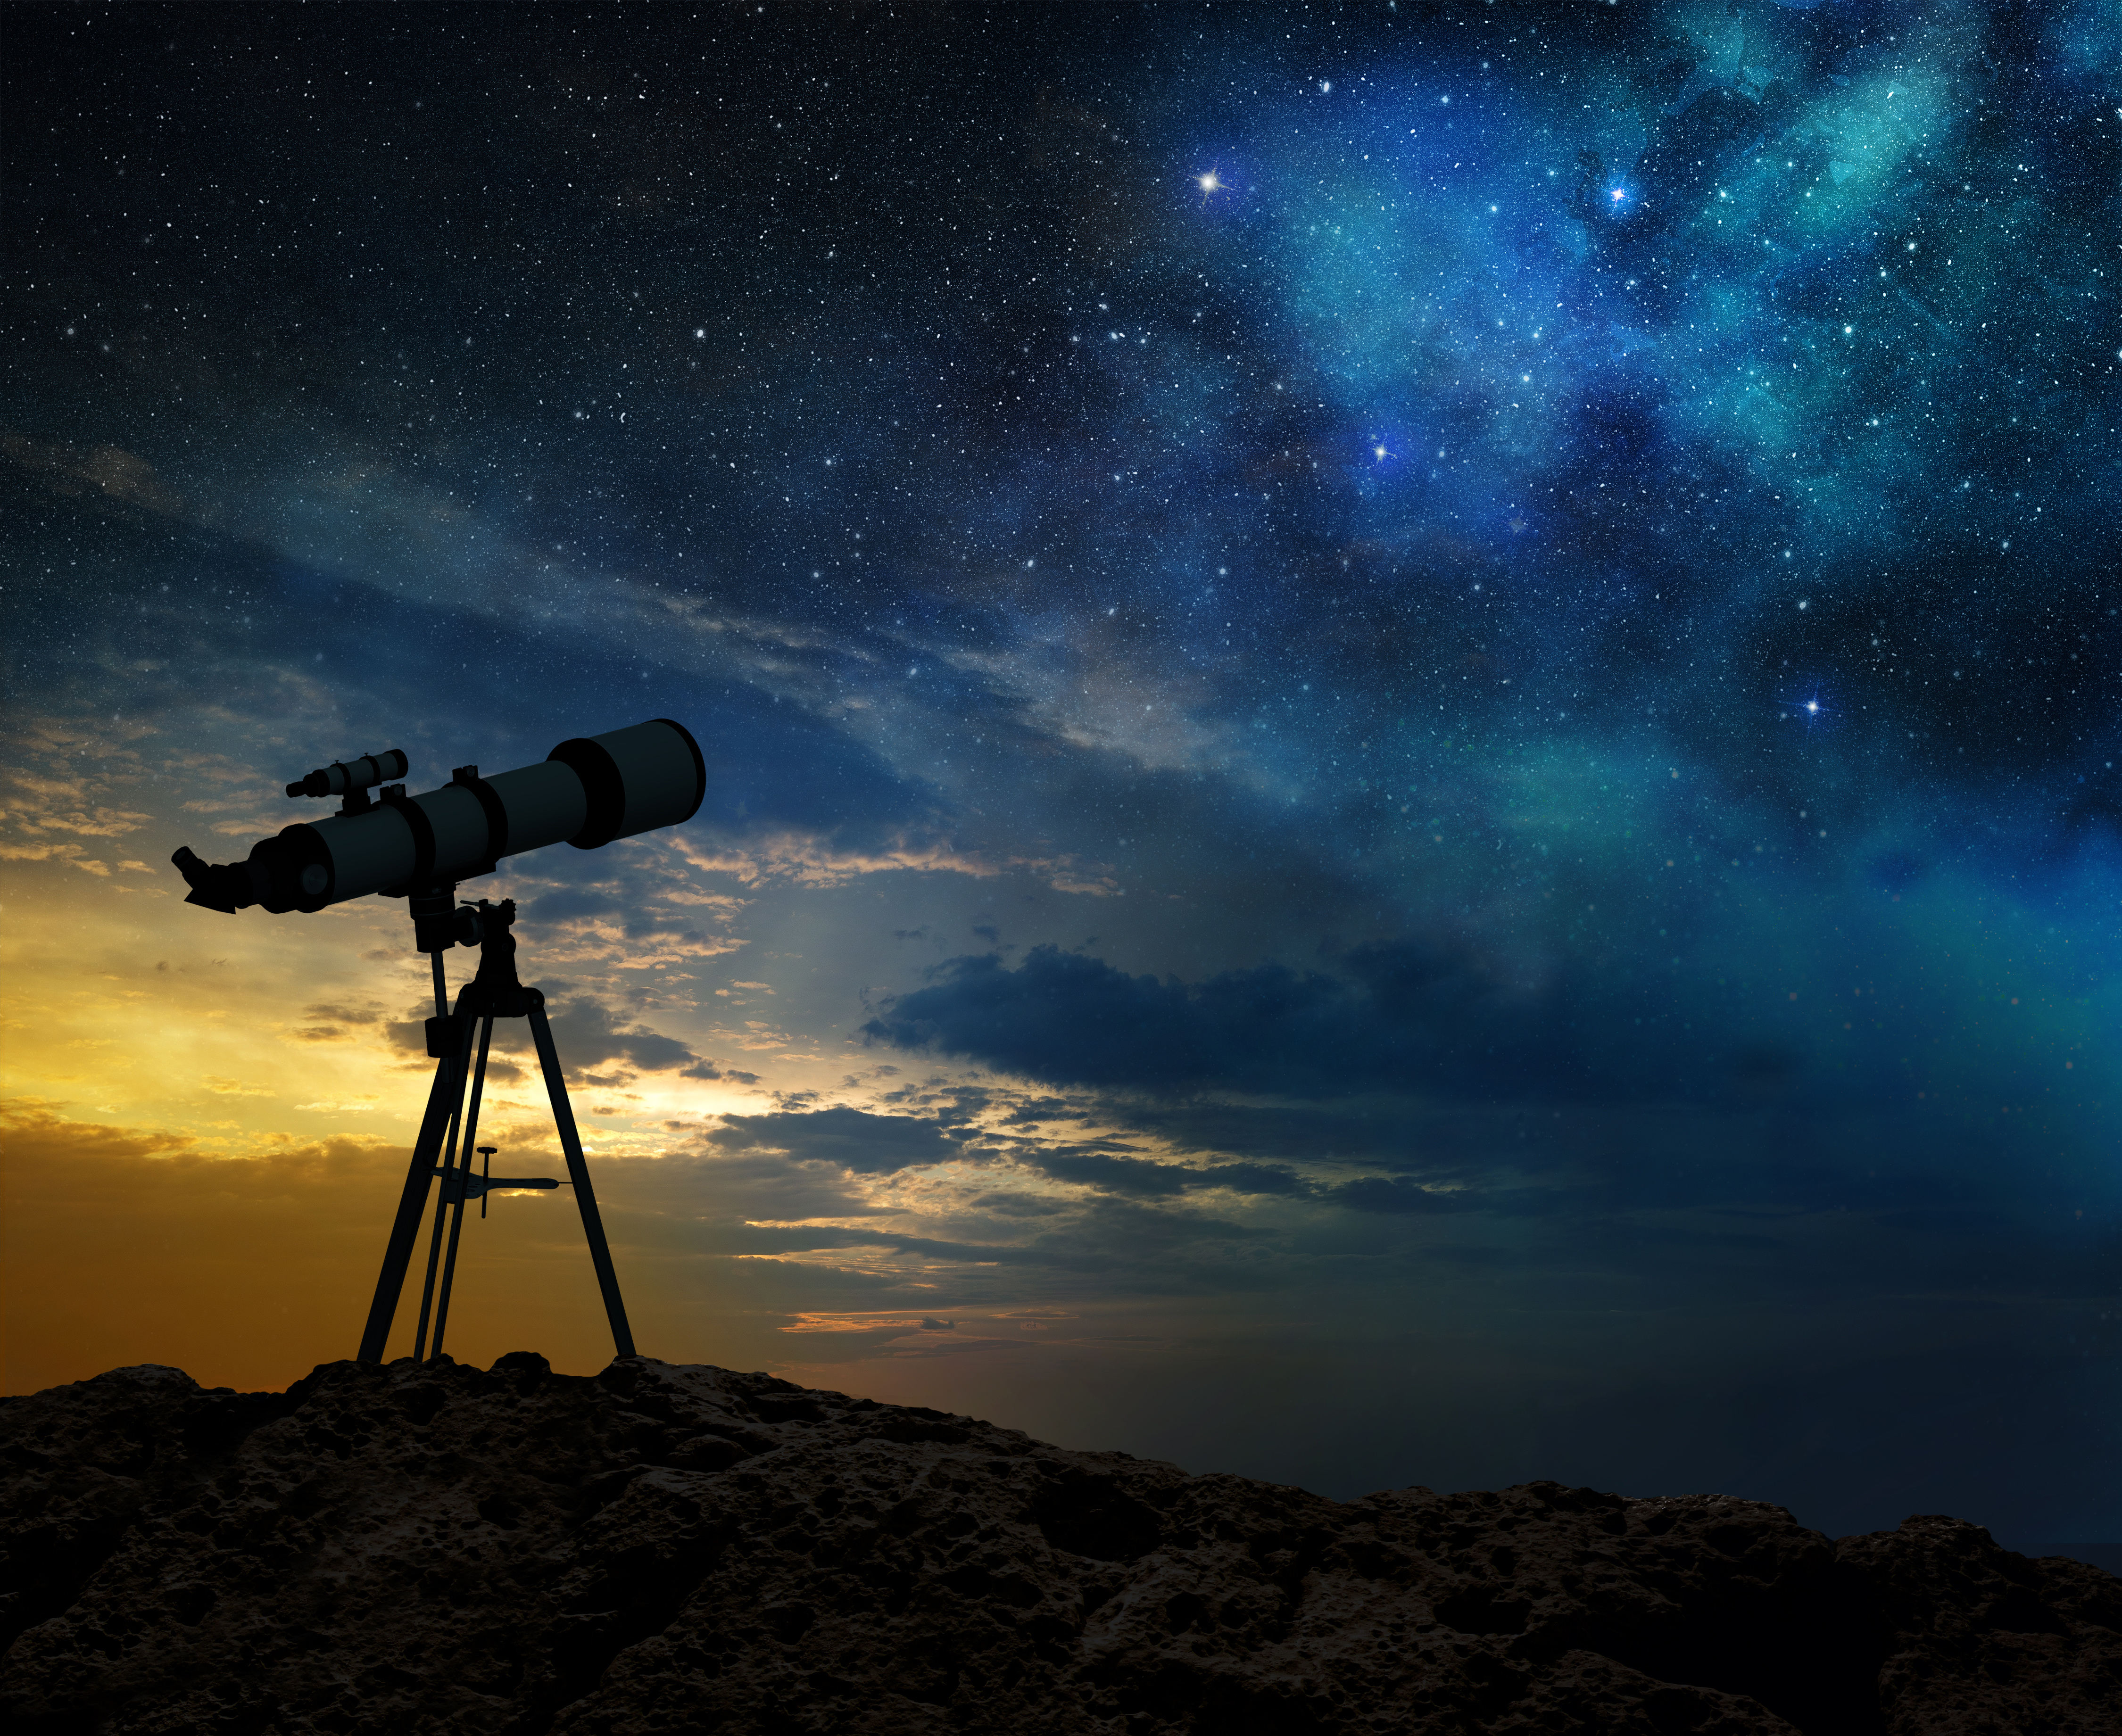 skywatcher-alert-2016-night-sky-celestial-events-calendar-st-george-news